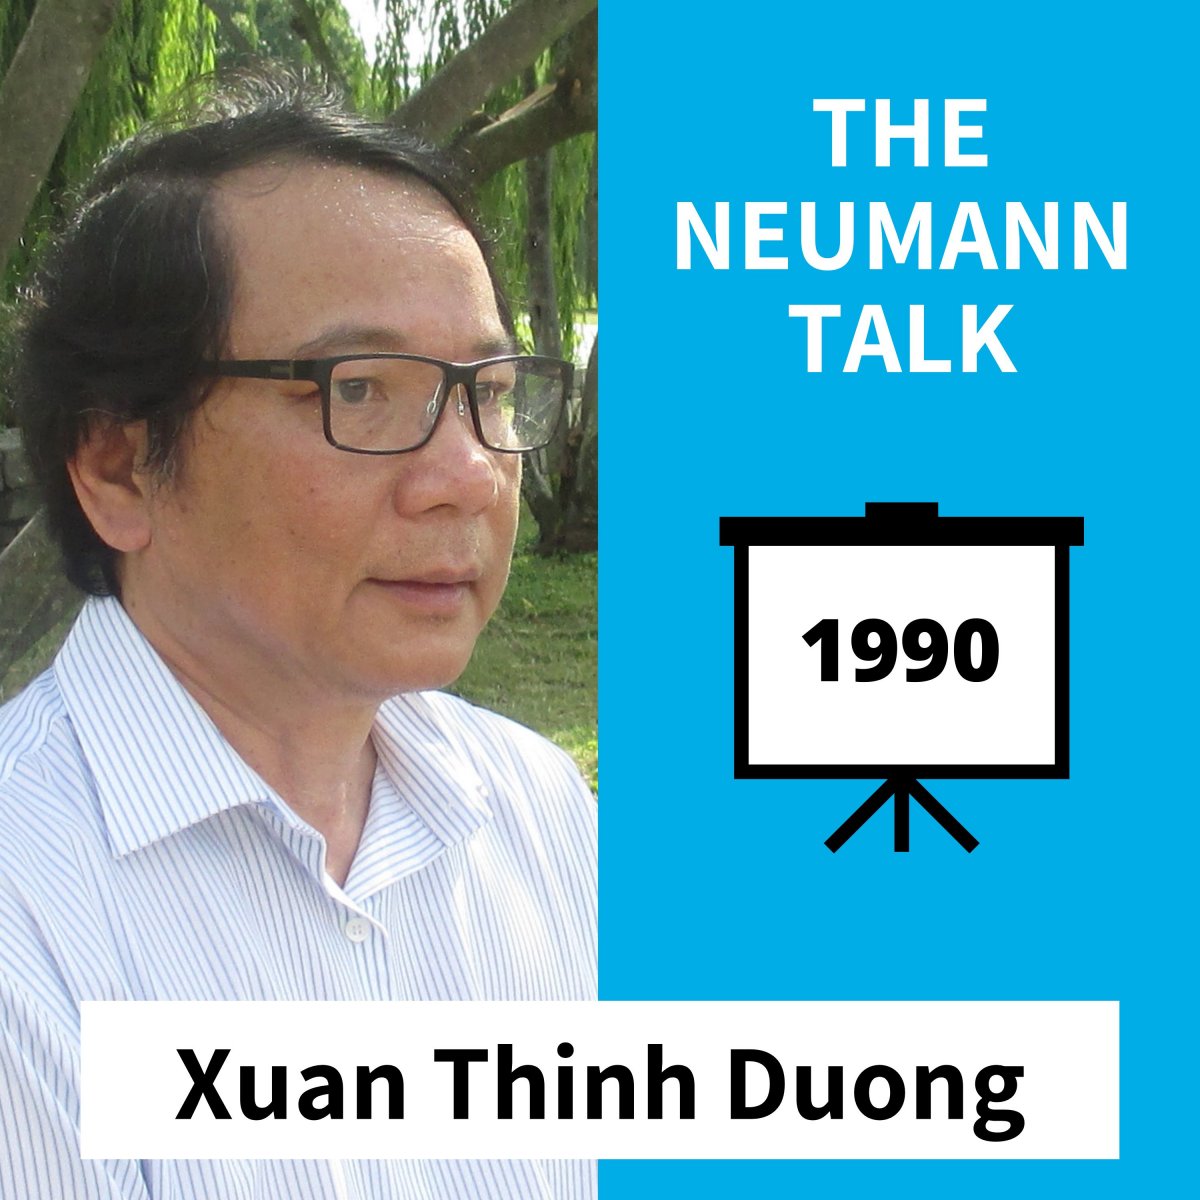 1990 B.H. Neumann Prize winner Xuan Thinh Duong